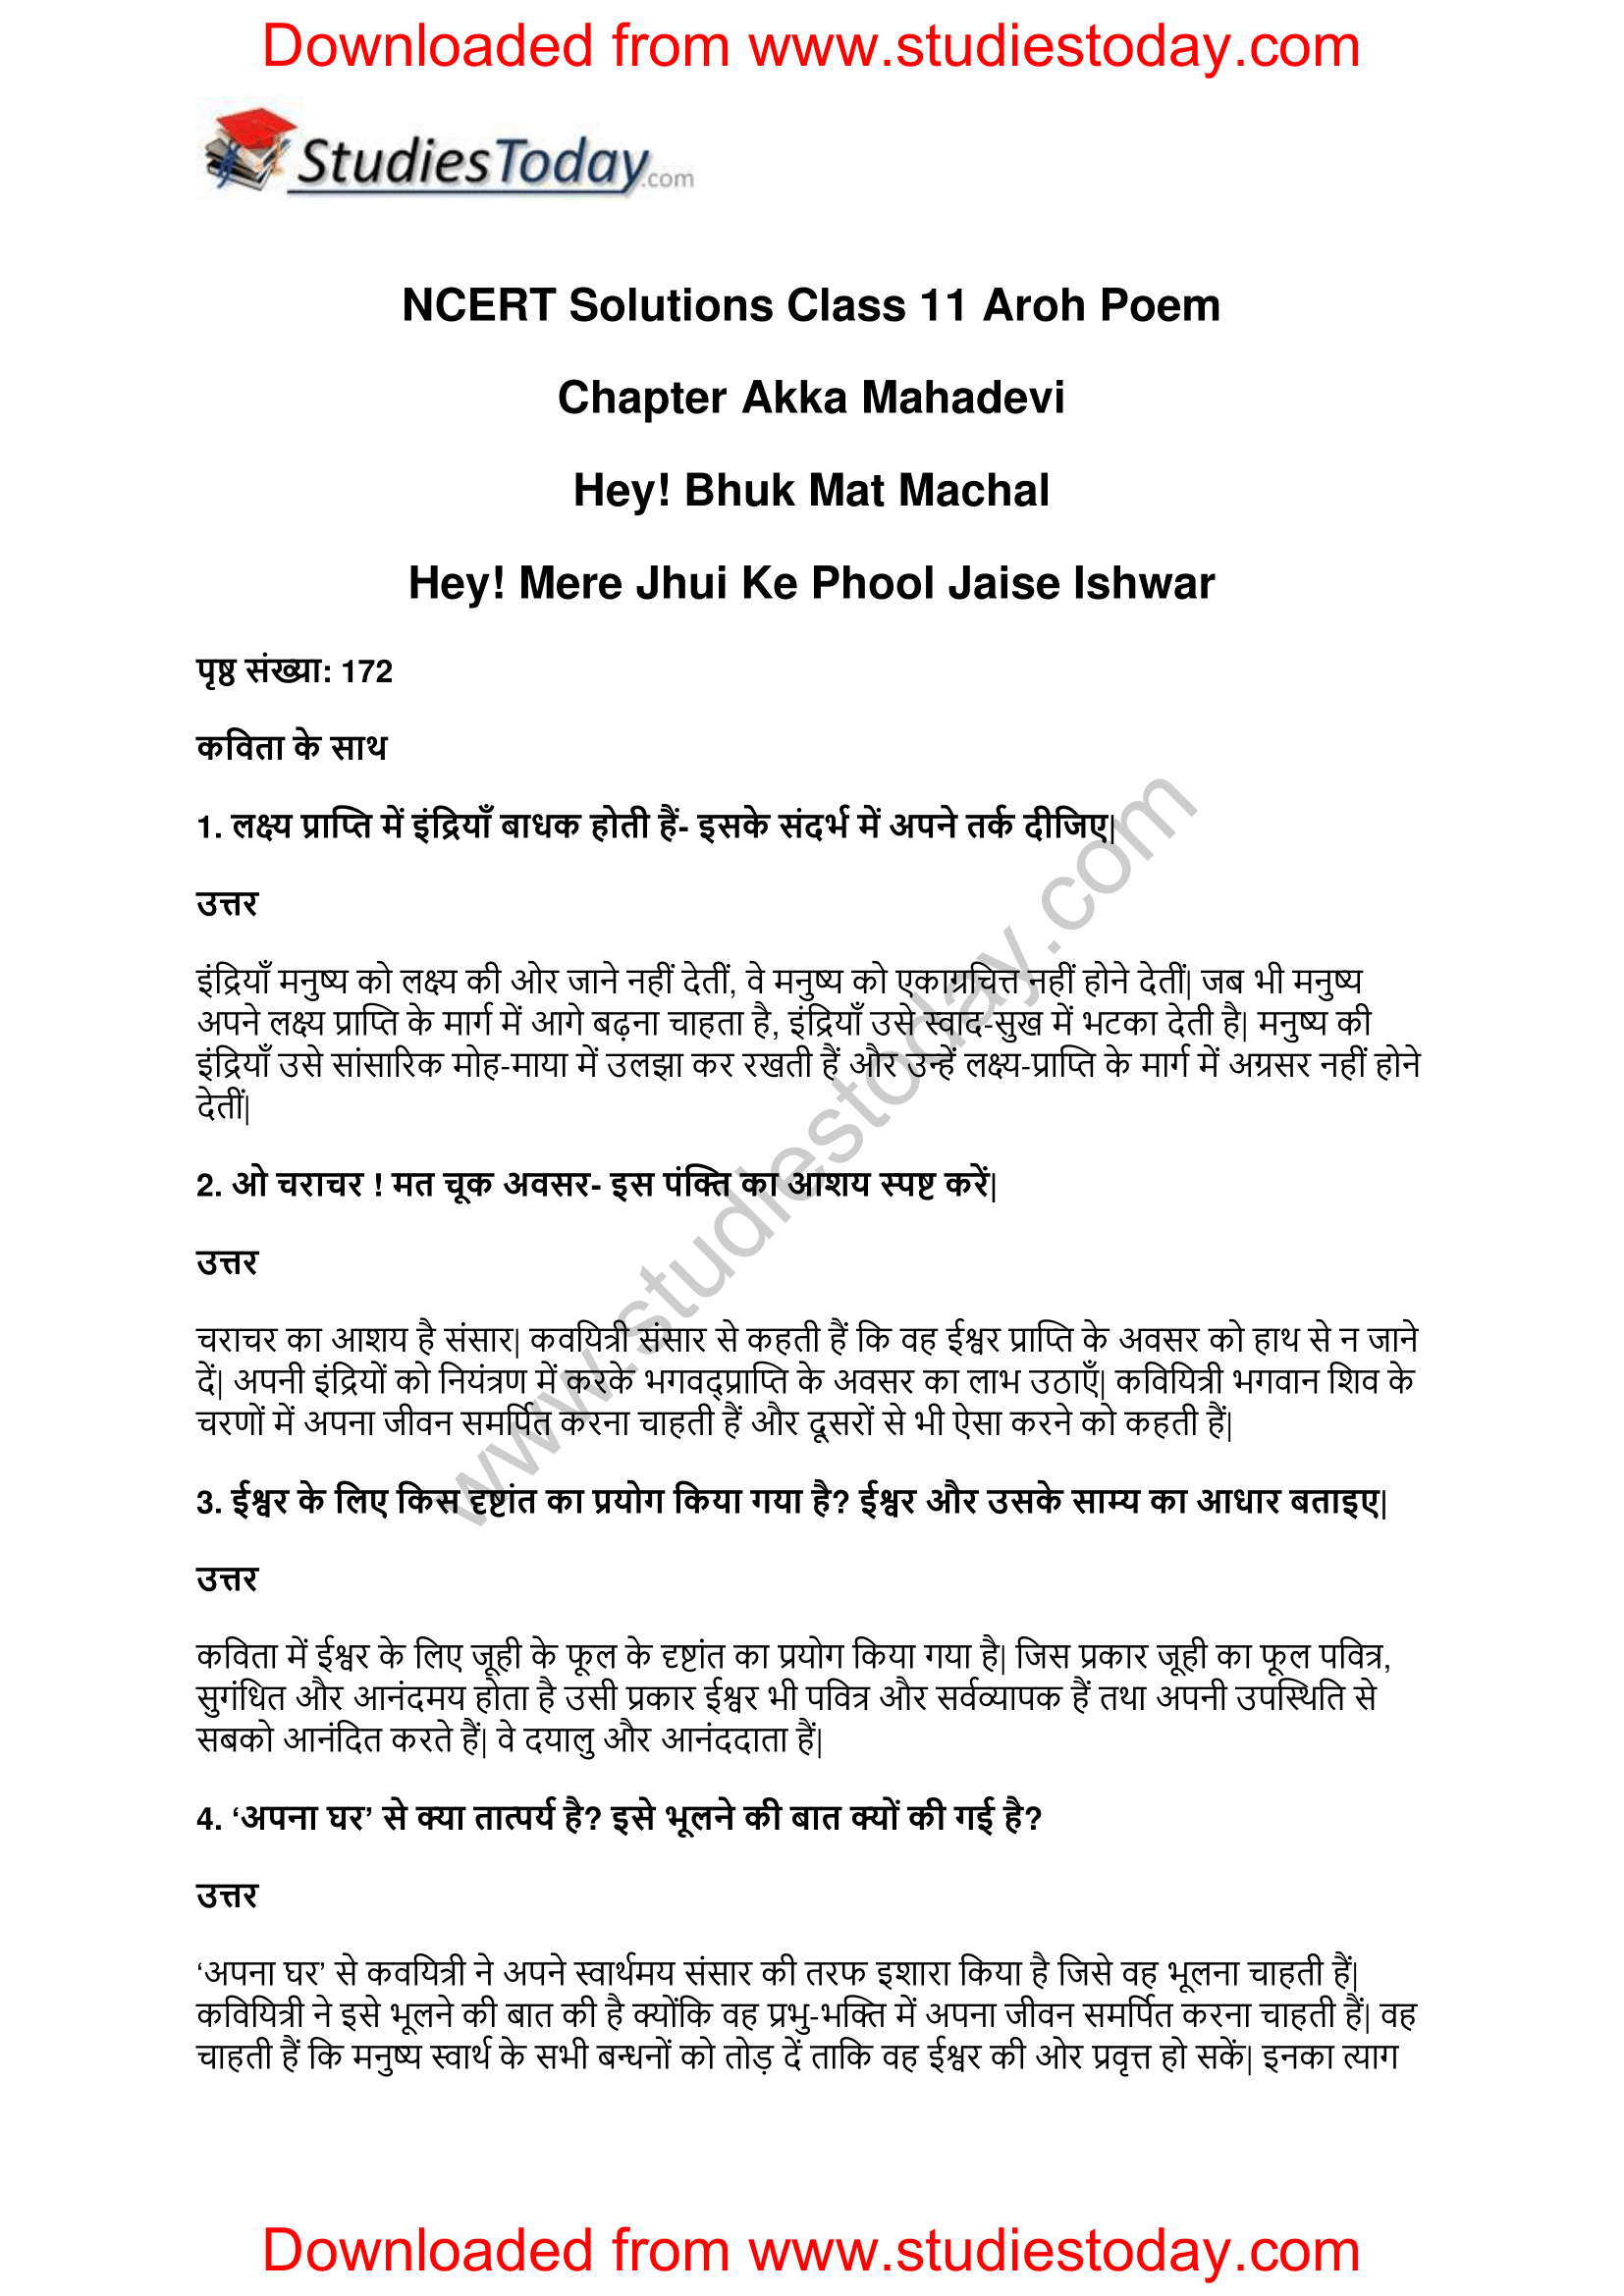 NCERT-Solutions-Class-11-Hindi-Aroh-Poem-Akka-Mahadevi-1